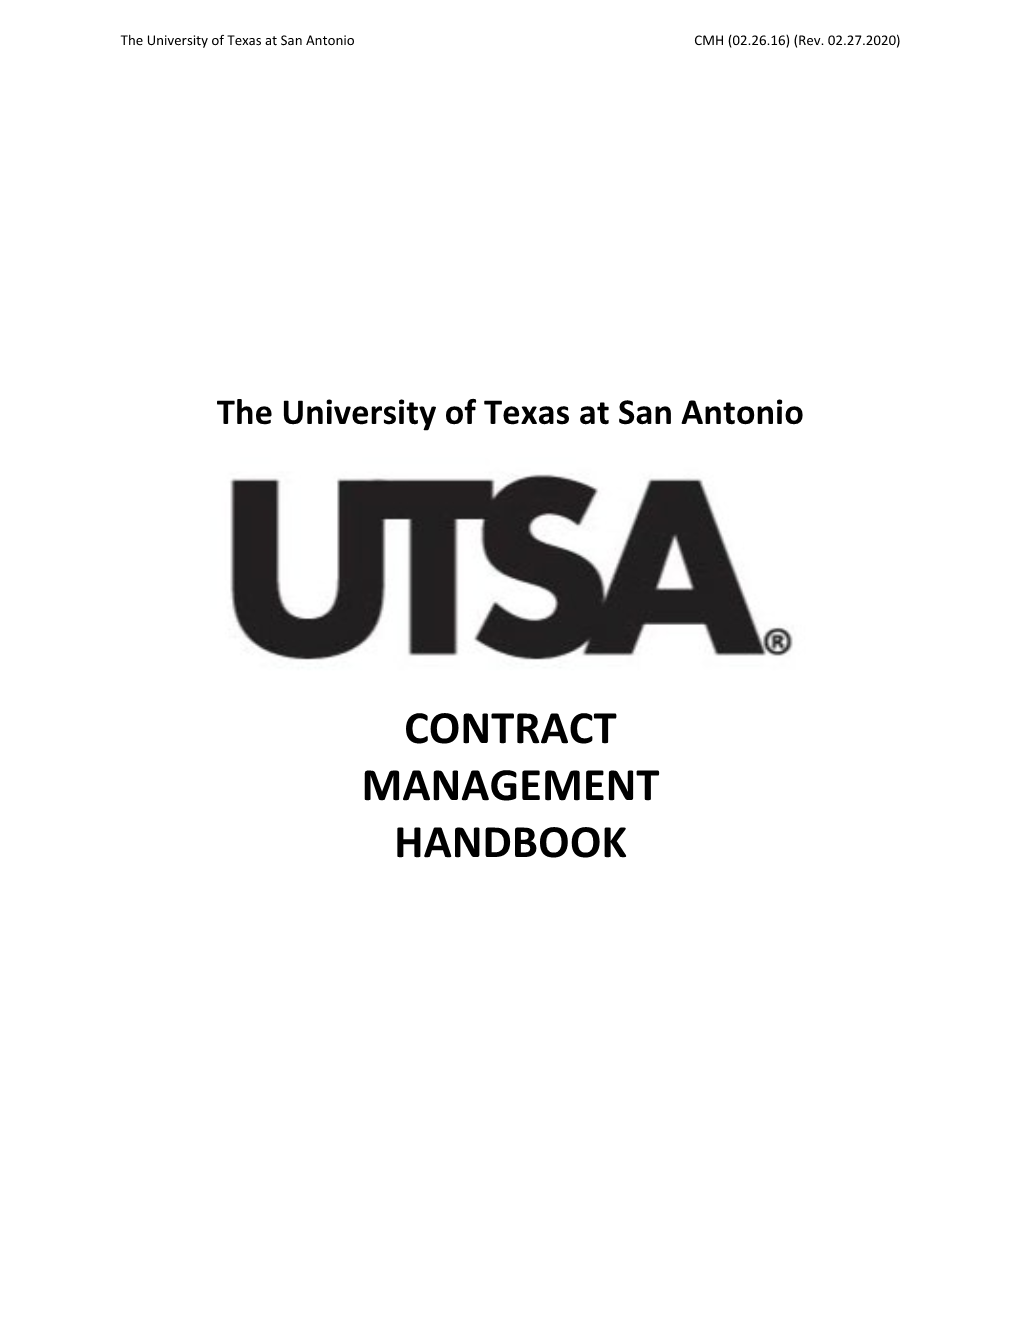 CONTRACT MANAGEMENT HANDBOOK the University of Texas at San Antonio CMH (02.26.16) (Rev